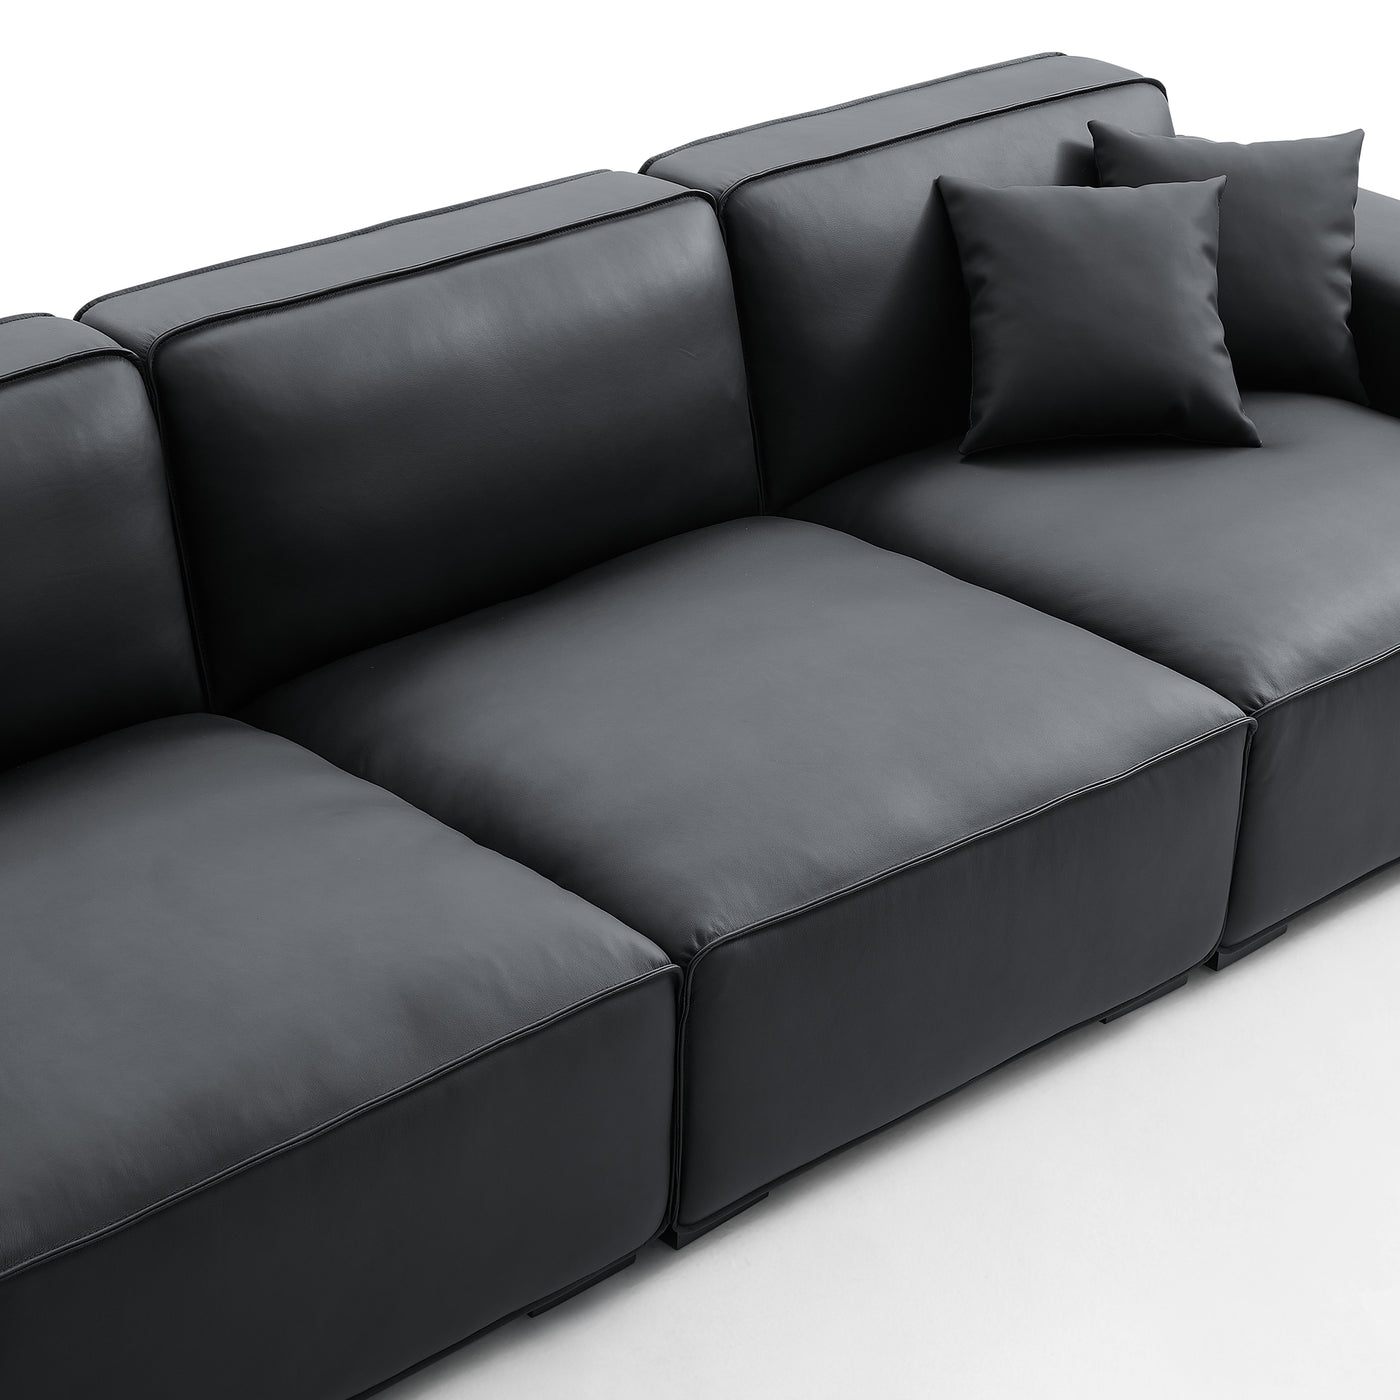 Domus Modular Beige Leather Sectional Sofa-Black